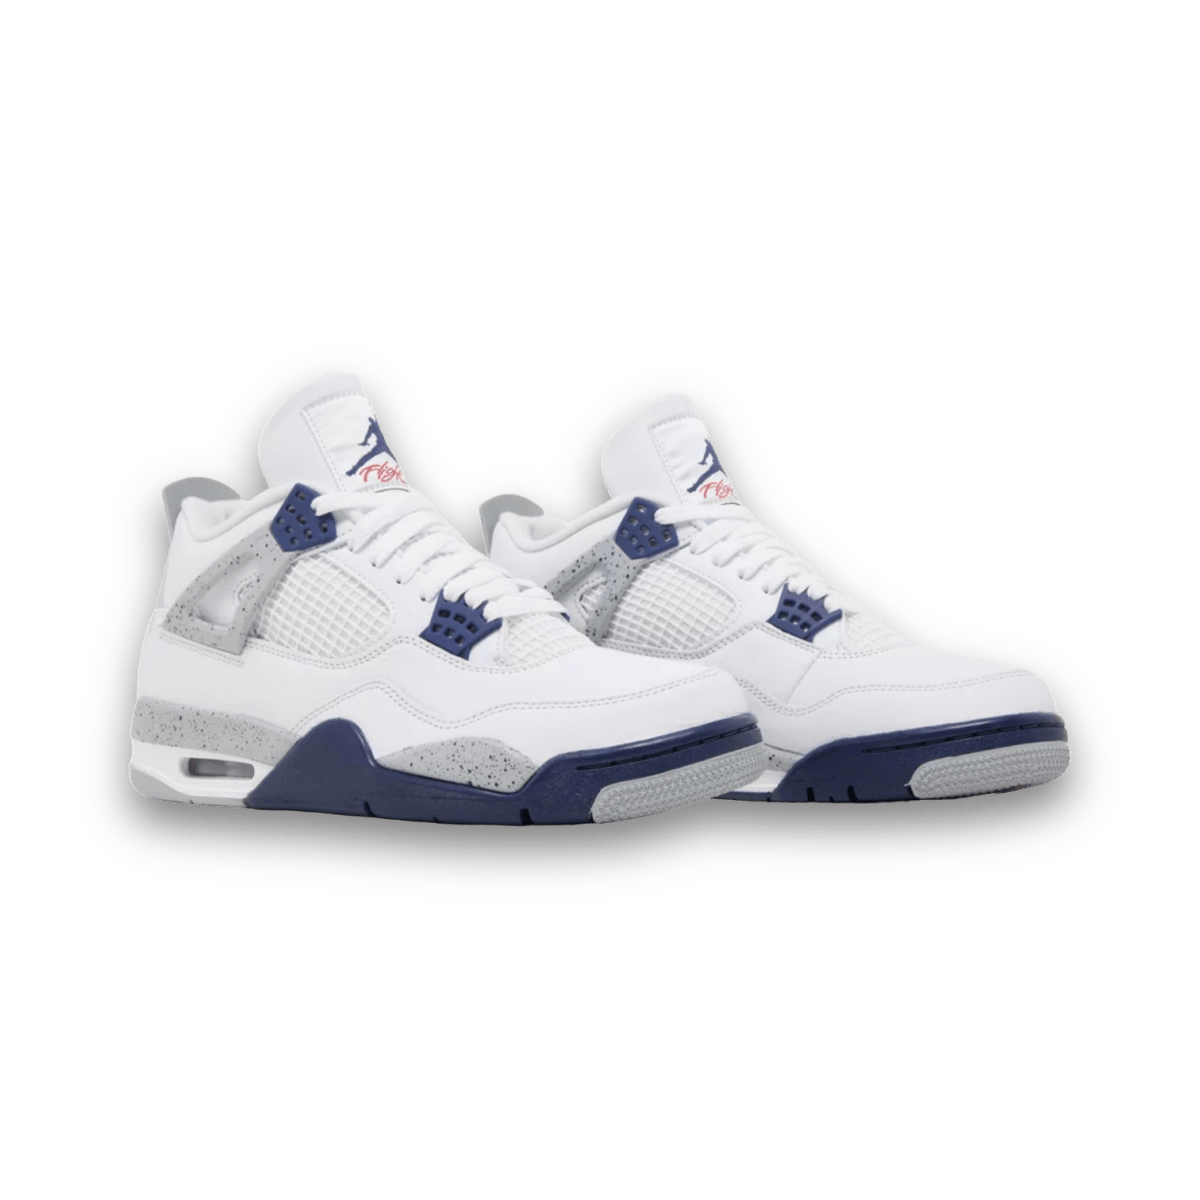 Laces for Lions Air Jordan 4 Retro Midnight Navy - sneaker - Mid Sneaker - Jordan - Jawns on Fire